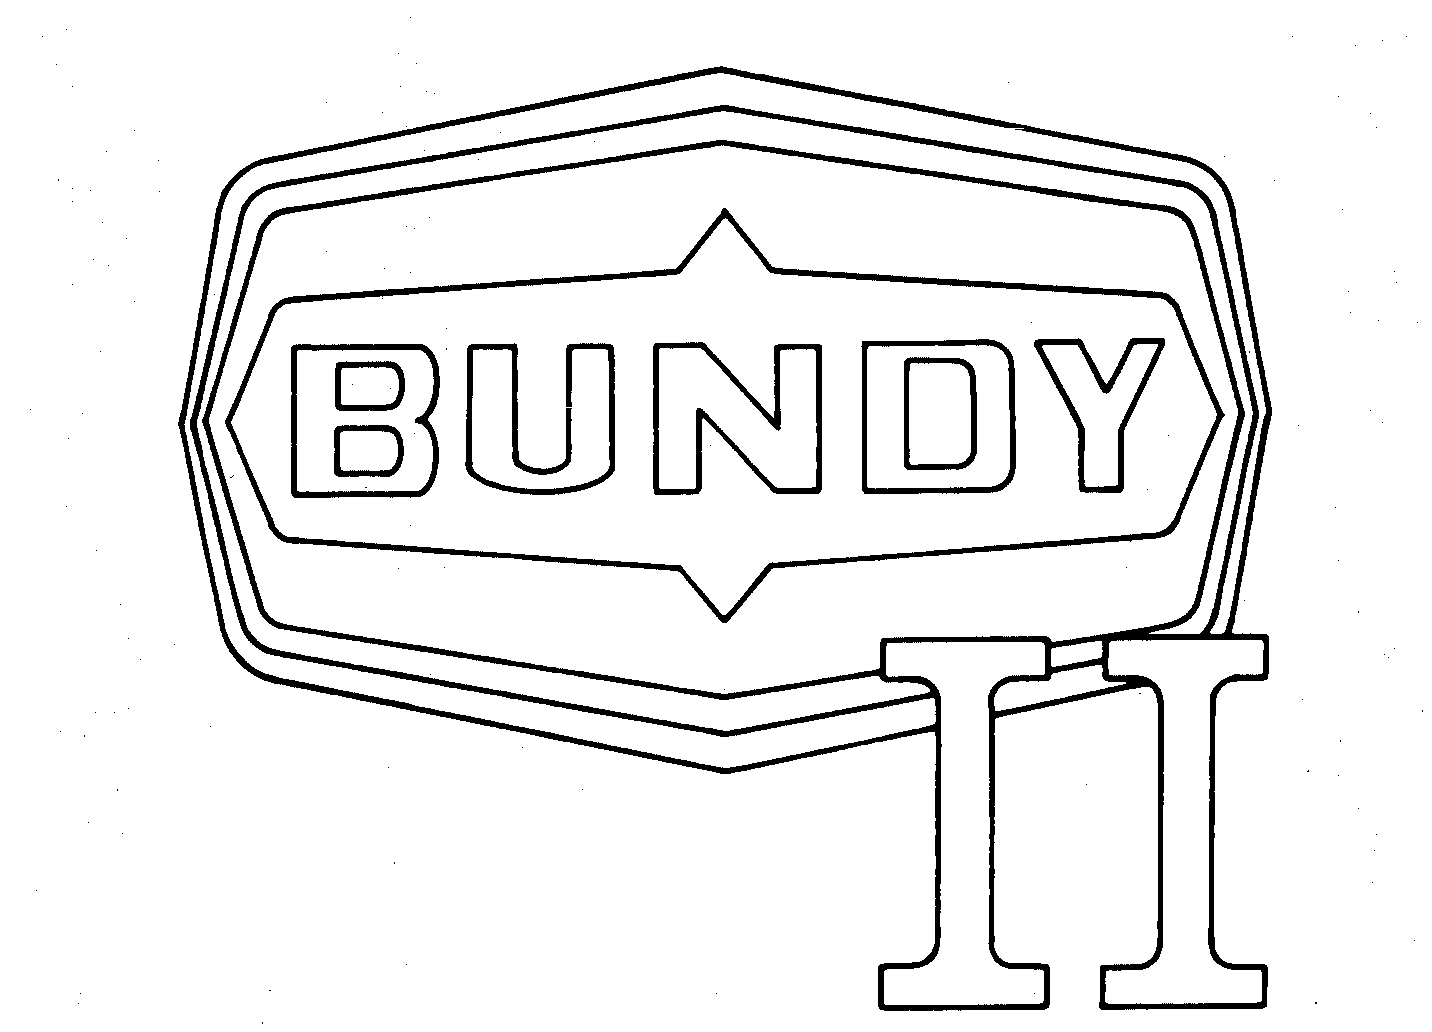  BUNDY II